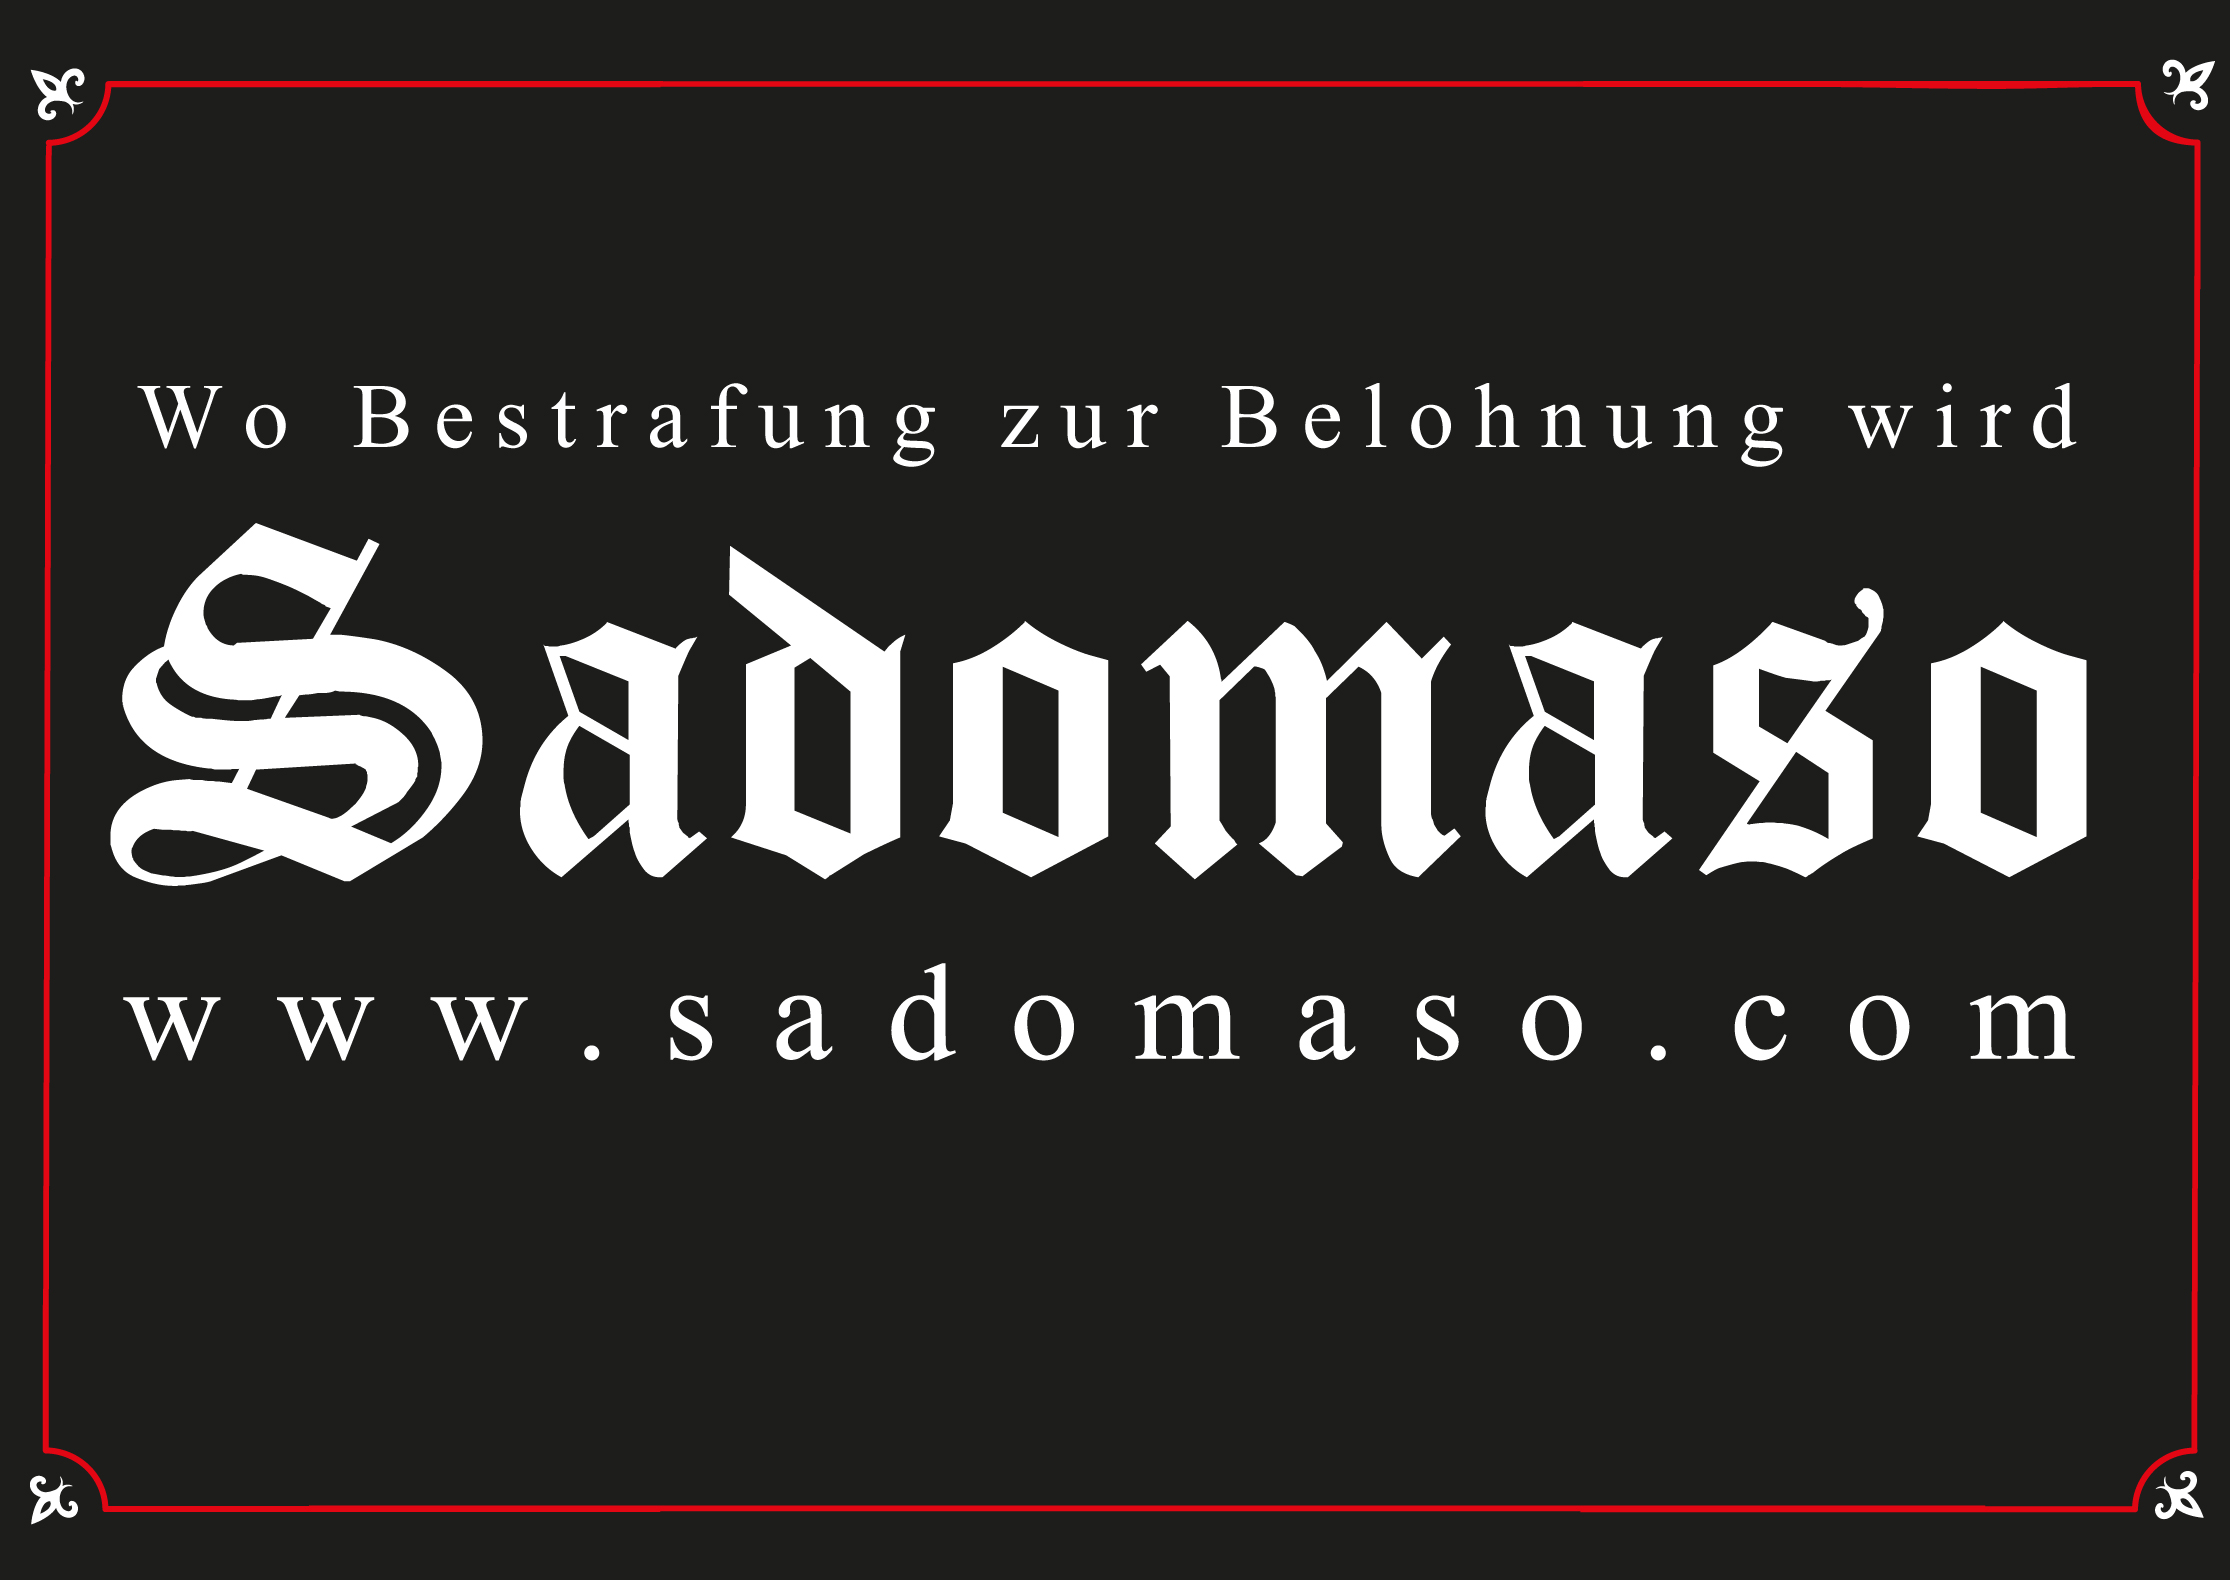 Sadomaso.com